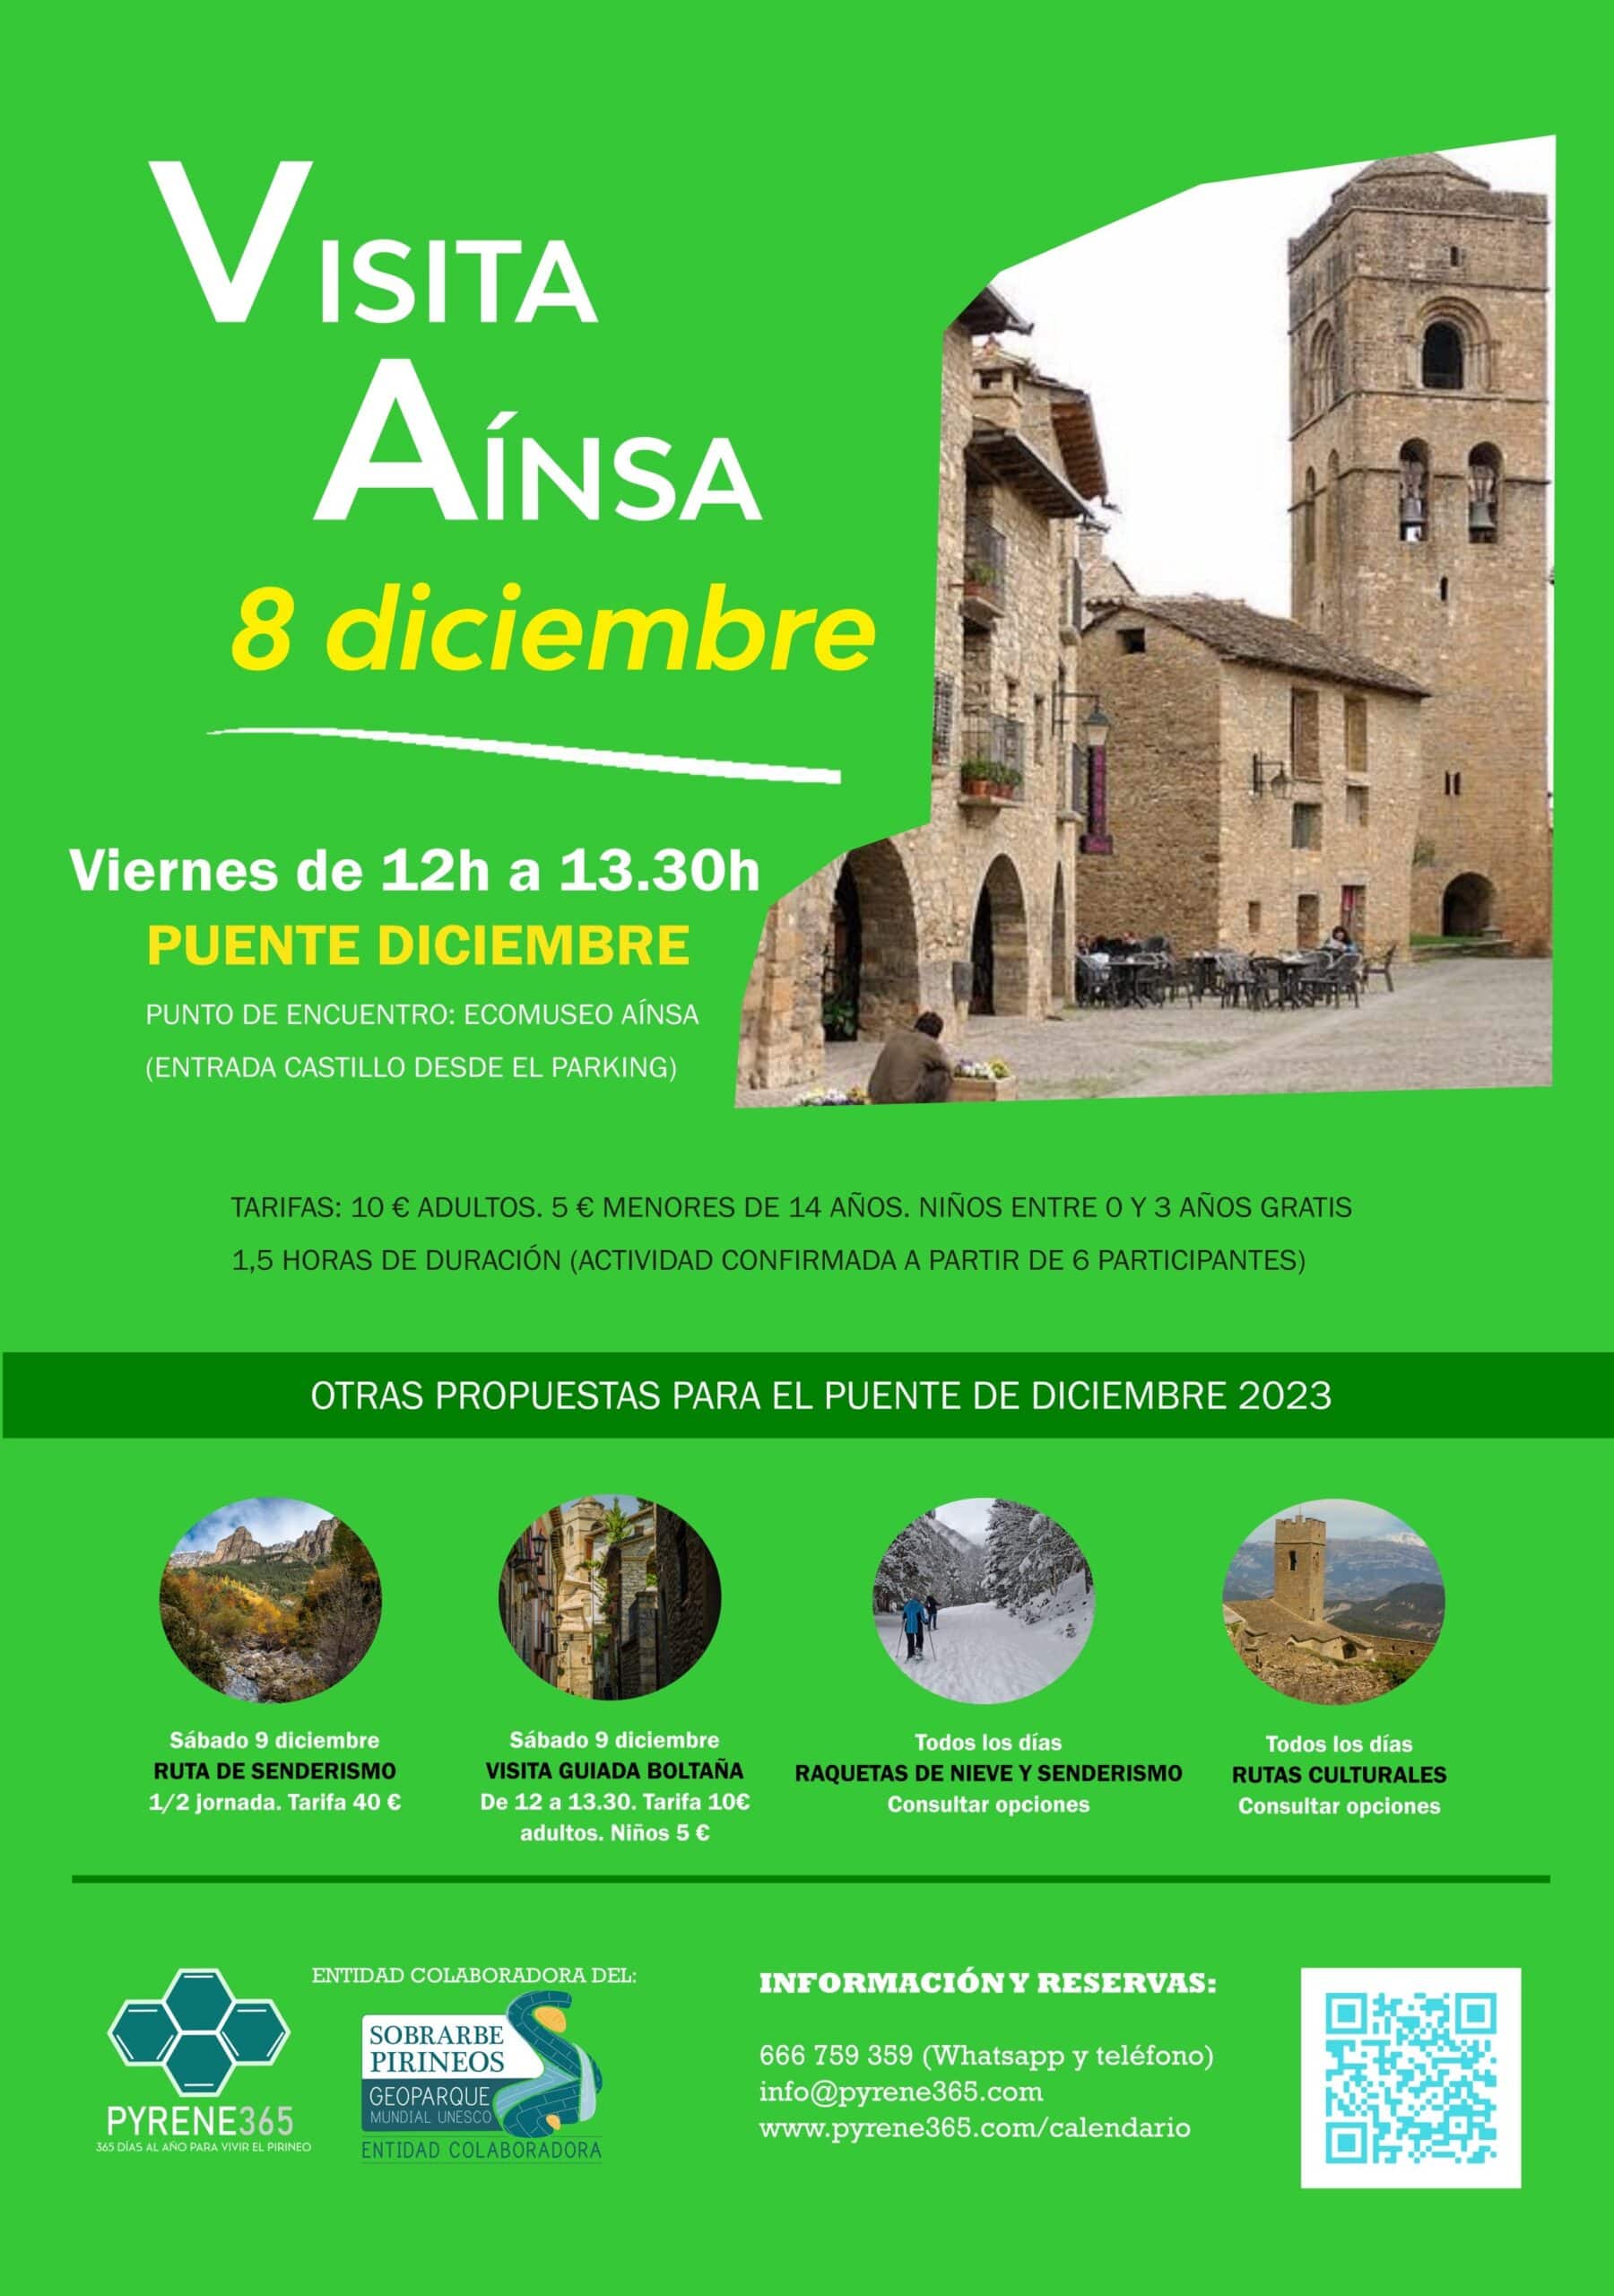 Villa de Ainsa - Sobrarbe Pirineo Visita Ainsa 8 de diciembre scaled